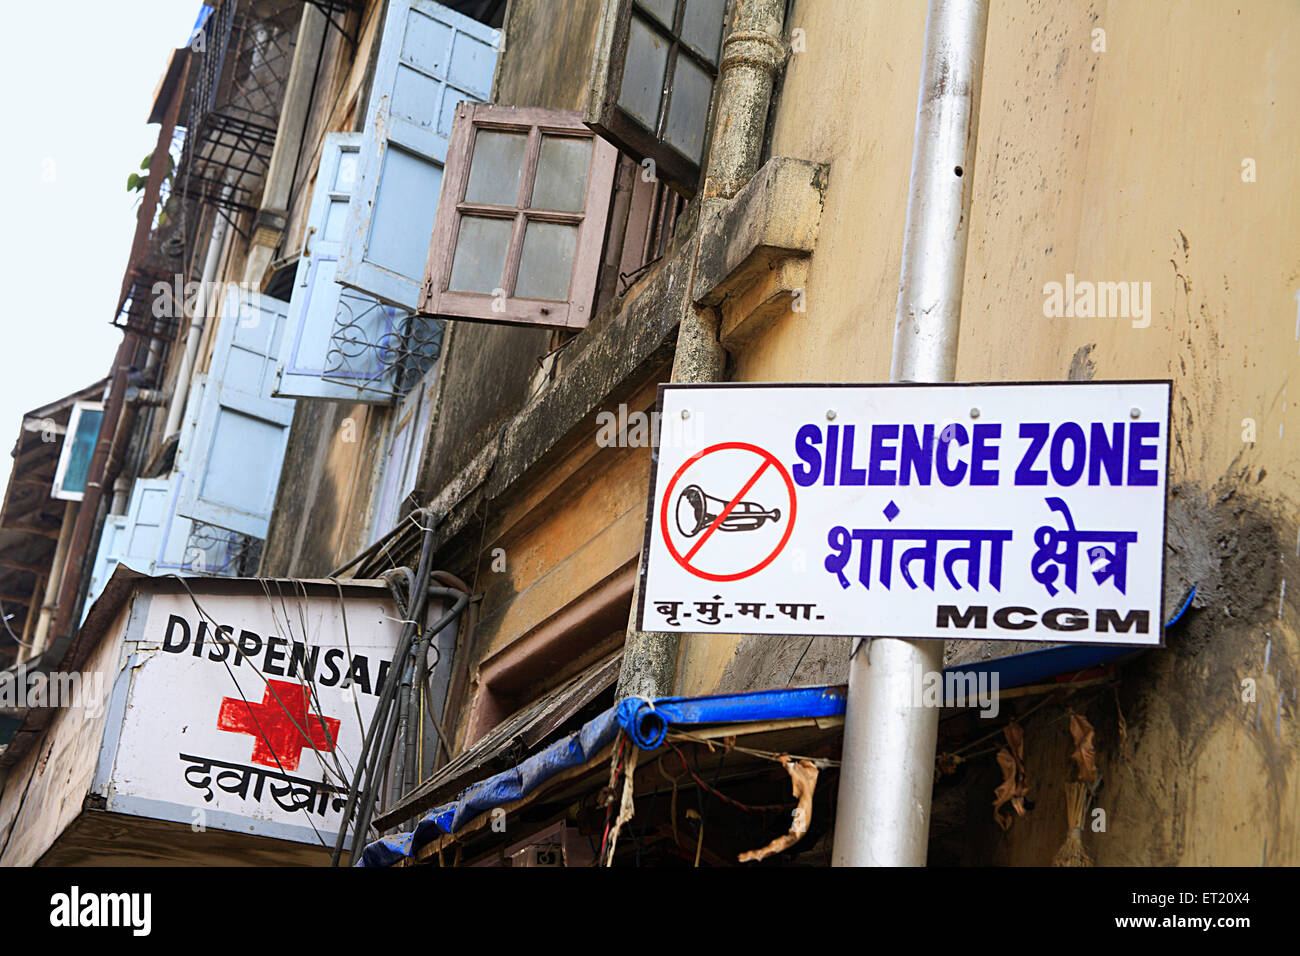 Dispensary und Silence Zone Zeichen, Bombay, Mumbai, Maharashtra, Indien, Asien, Asien, Indien Stockfoto